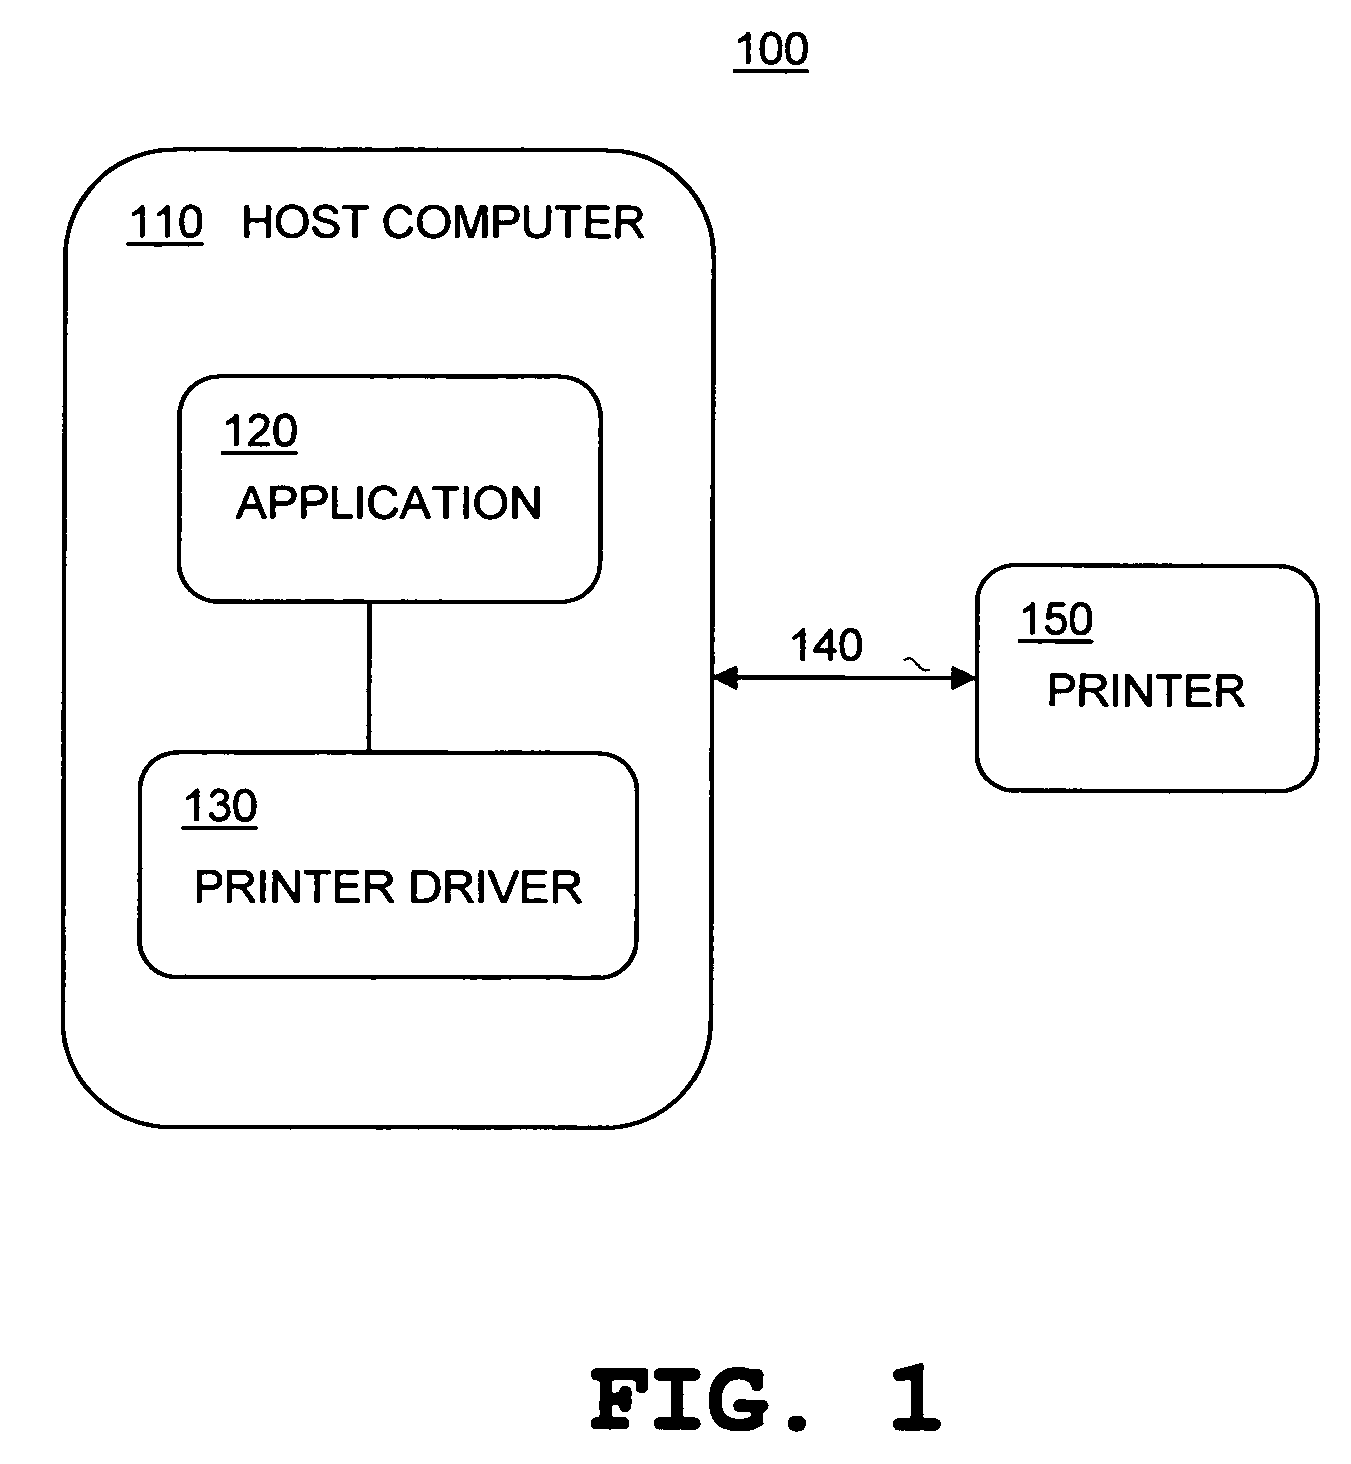 Application-based profiles of printer driver settings